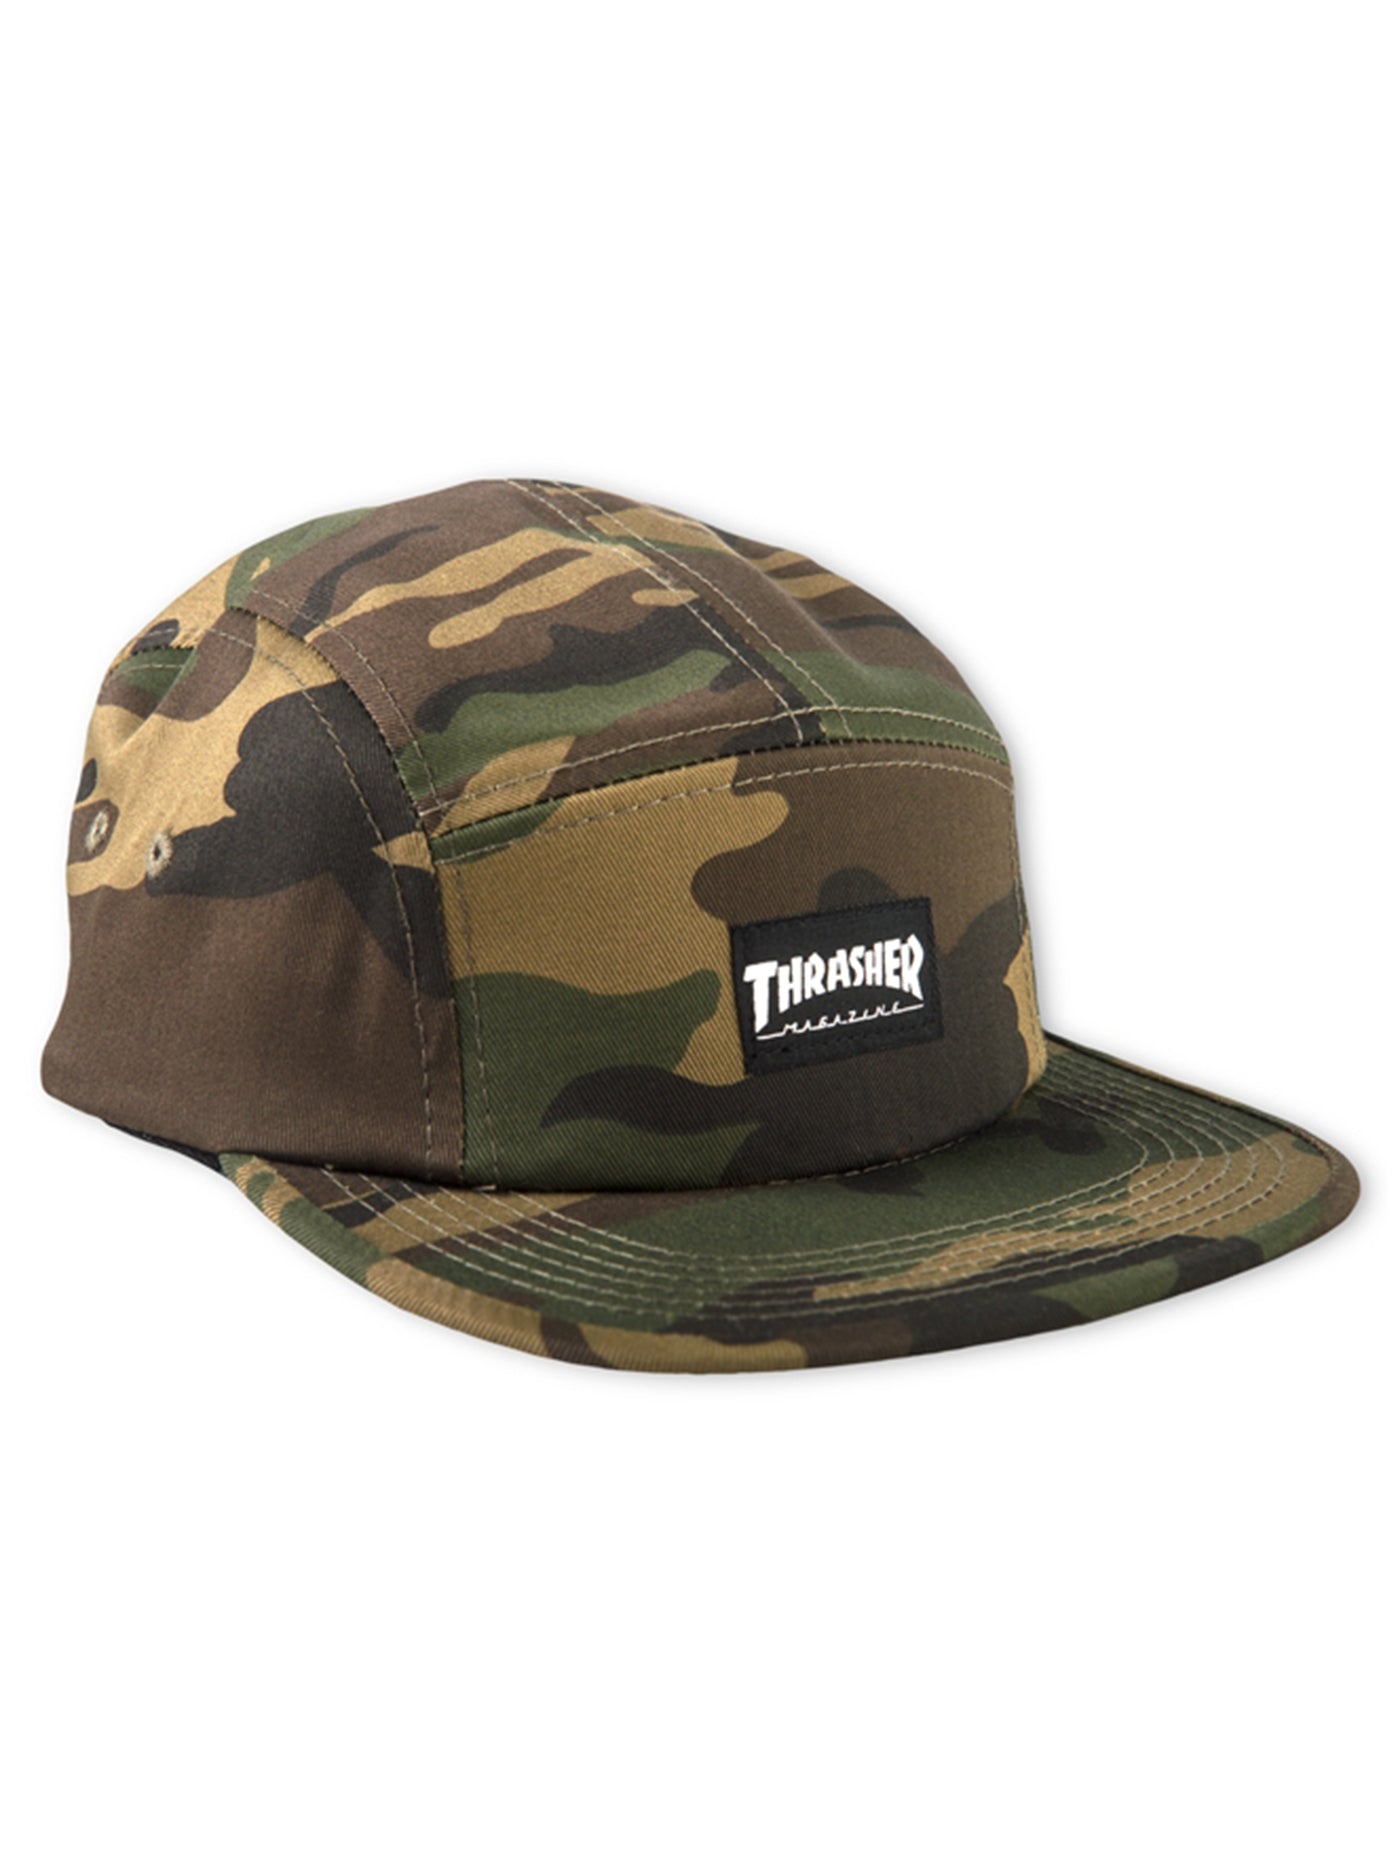 Thrasher 5 Panel Camo Strapback Hat